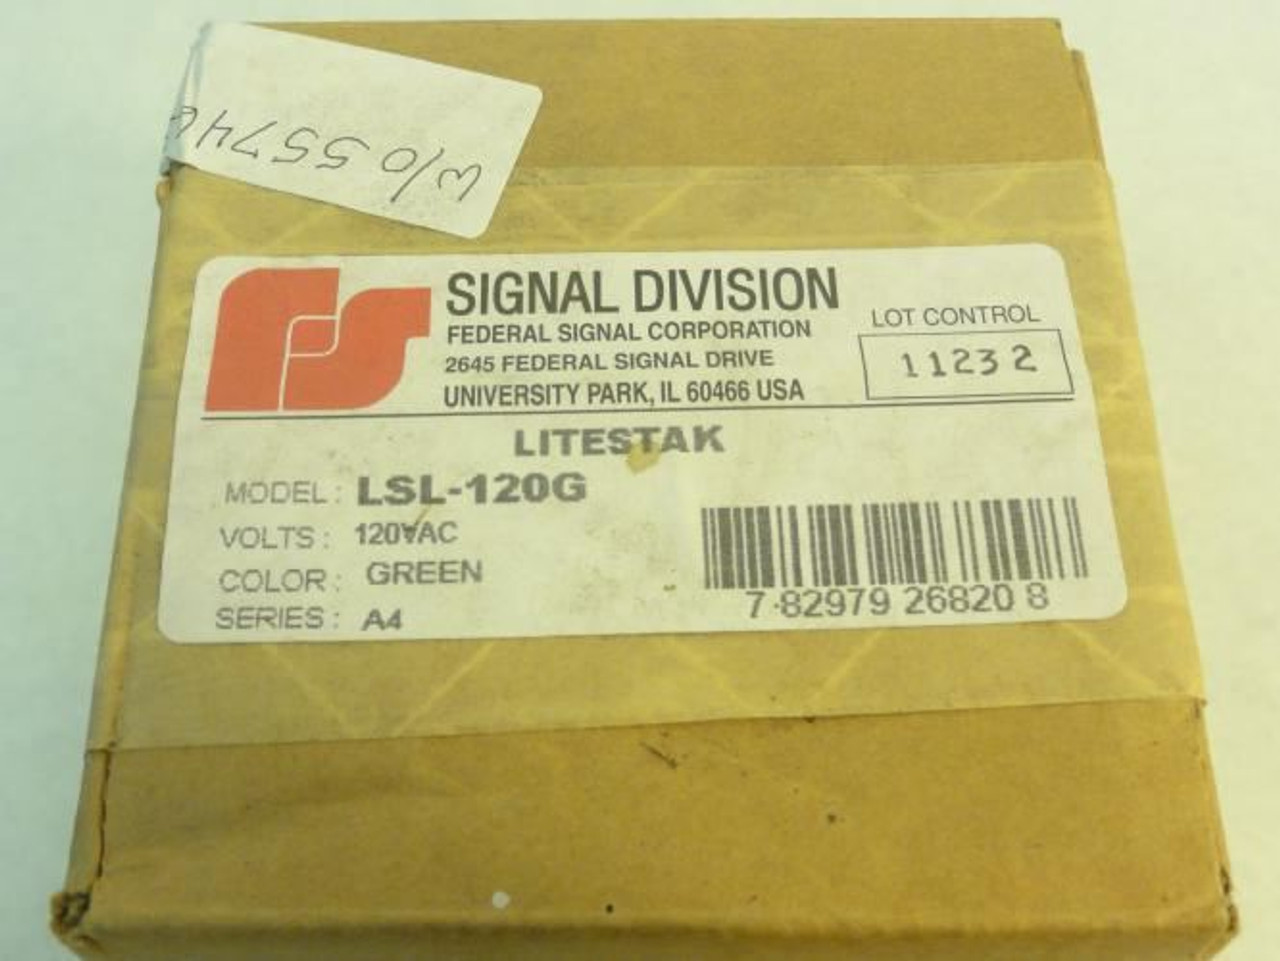 Federal Signal LSL-120G; Litestak; Green; Series A4; 120VAC